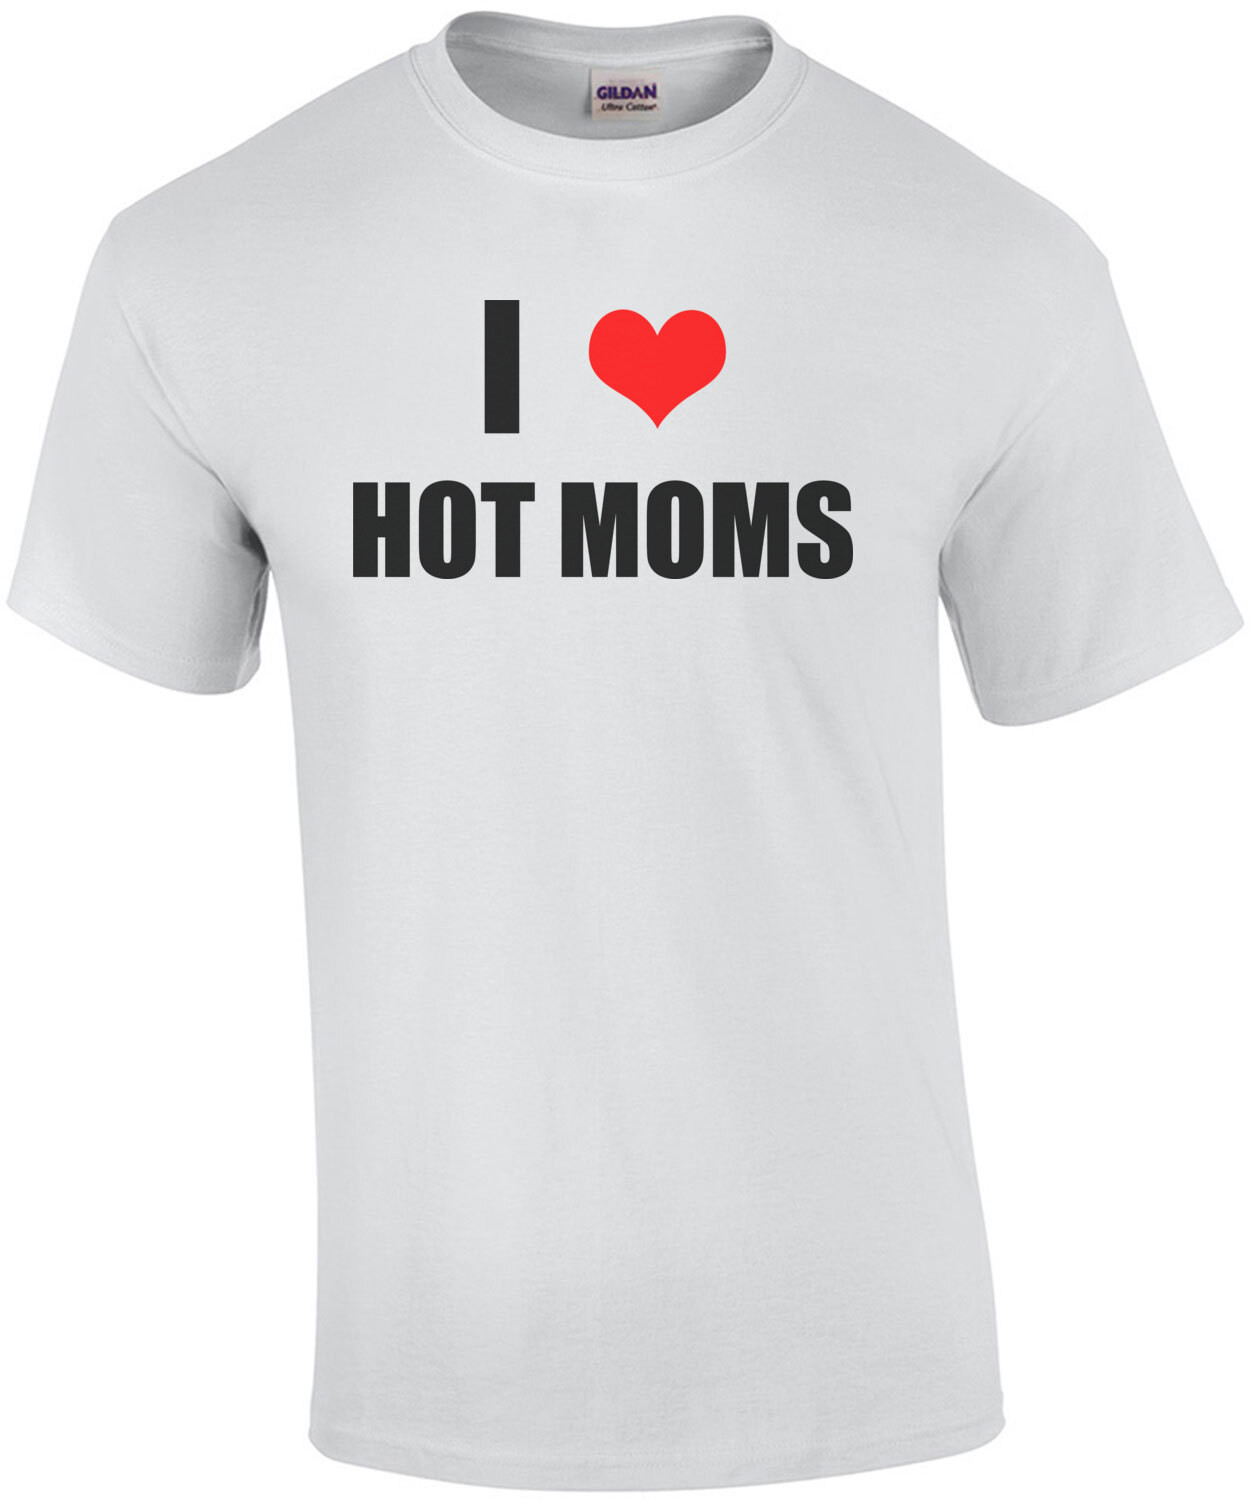 I (heart) Love Hot Moms - Funny T-Shirt